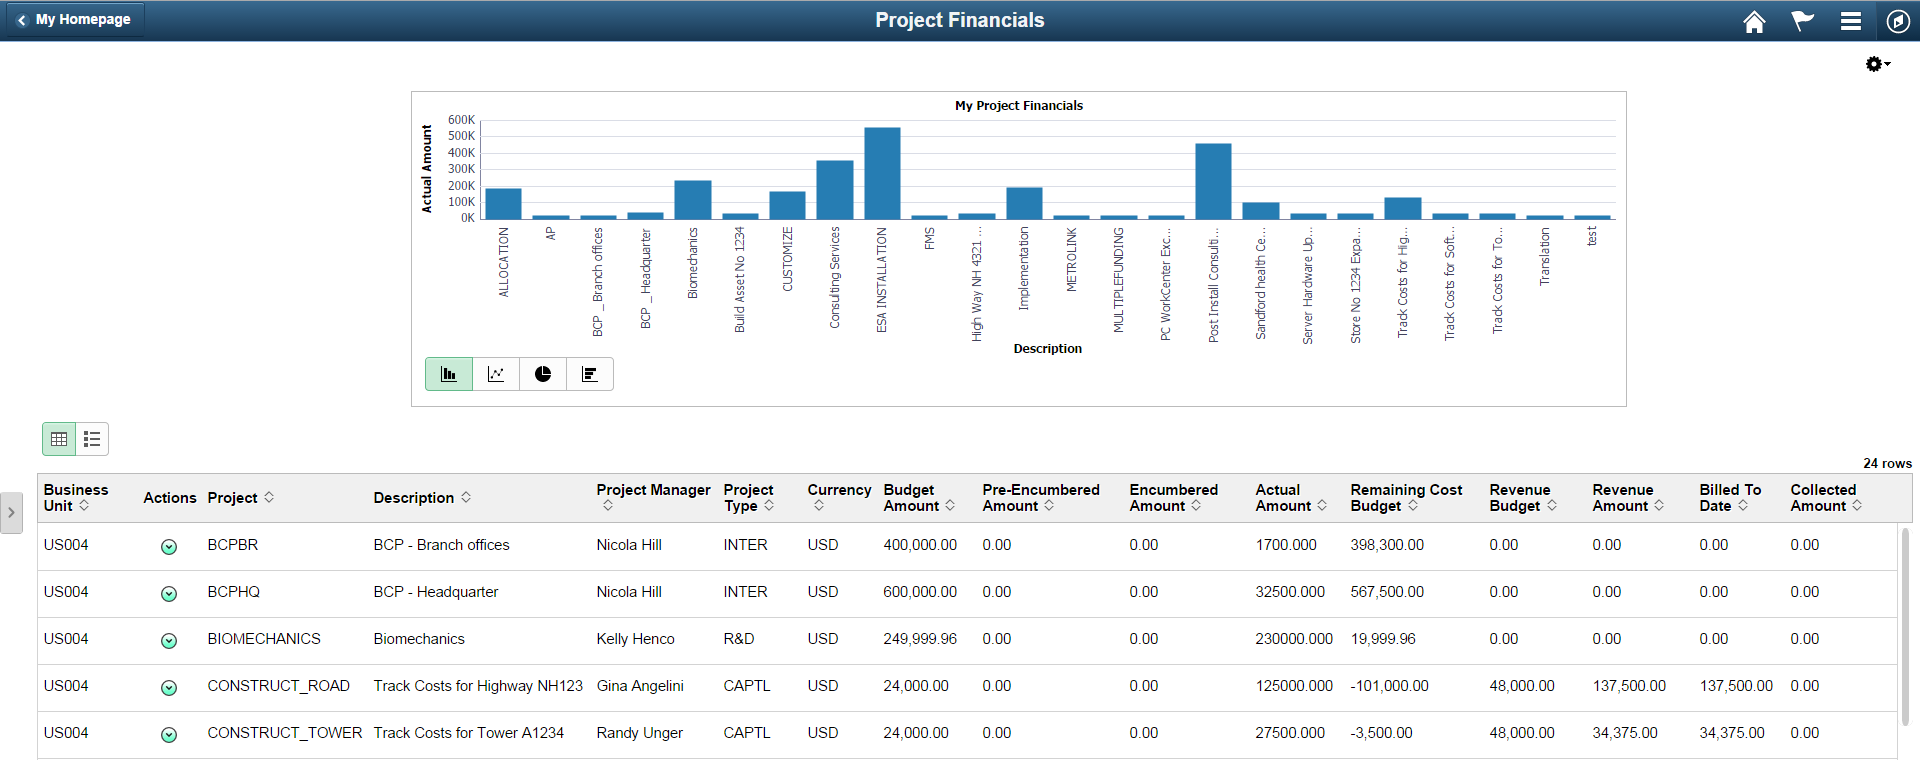 Project Financials (pivot) page